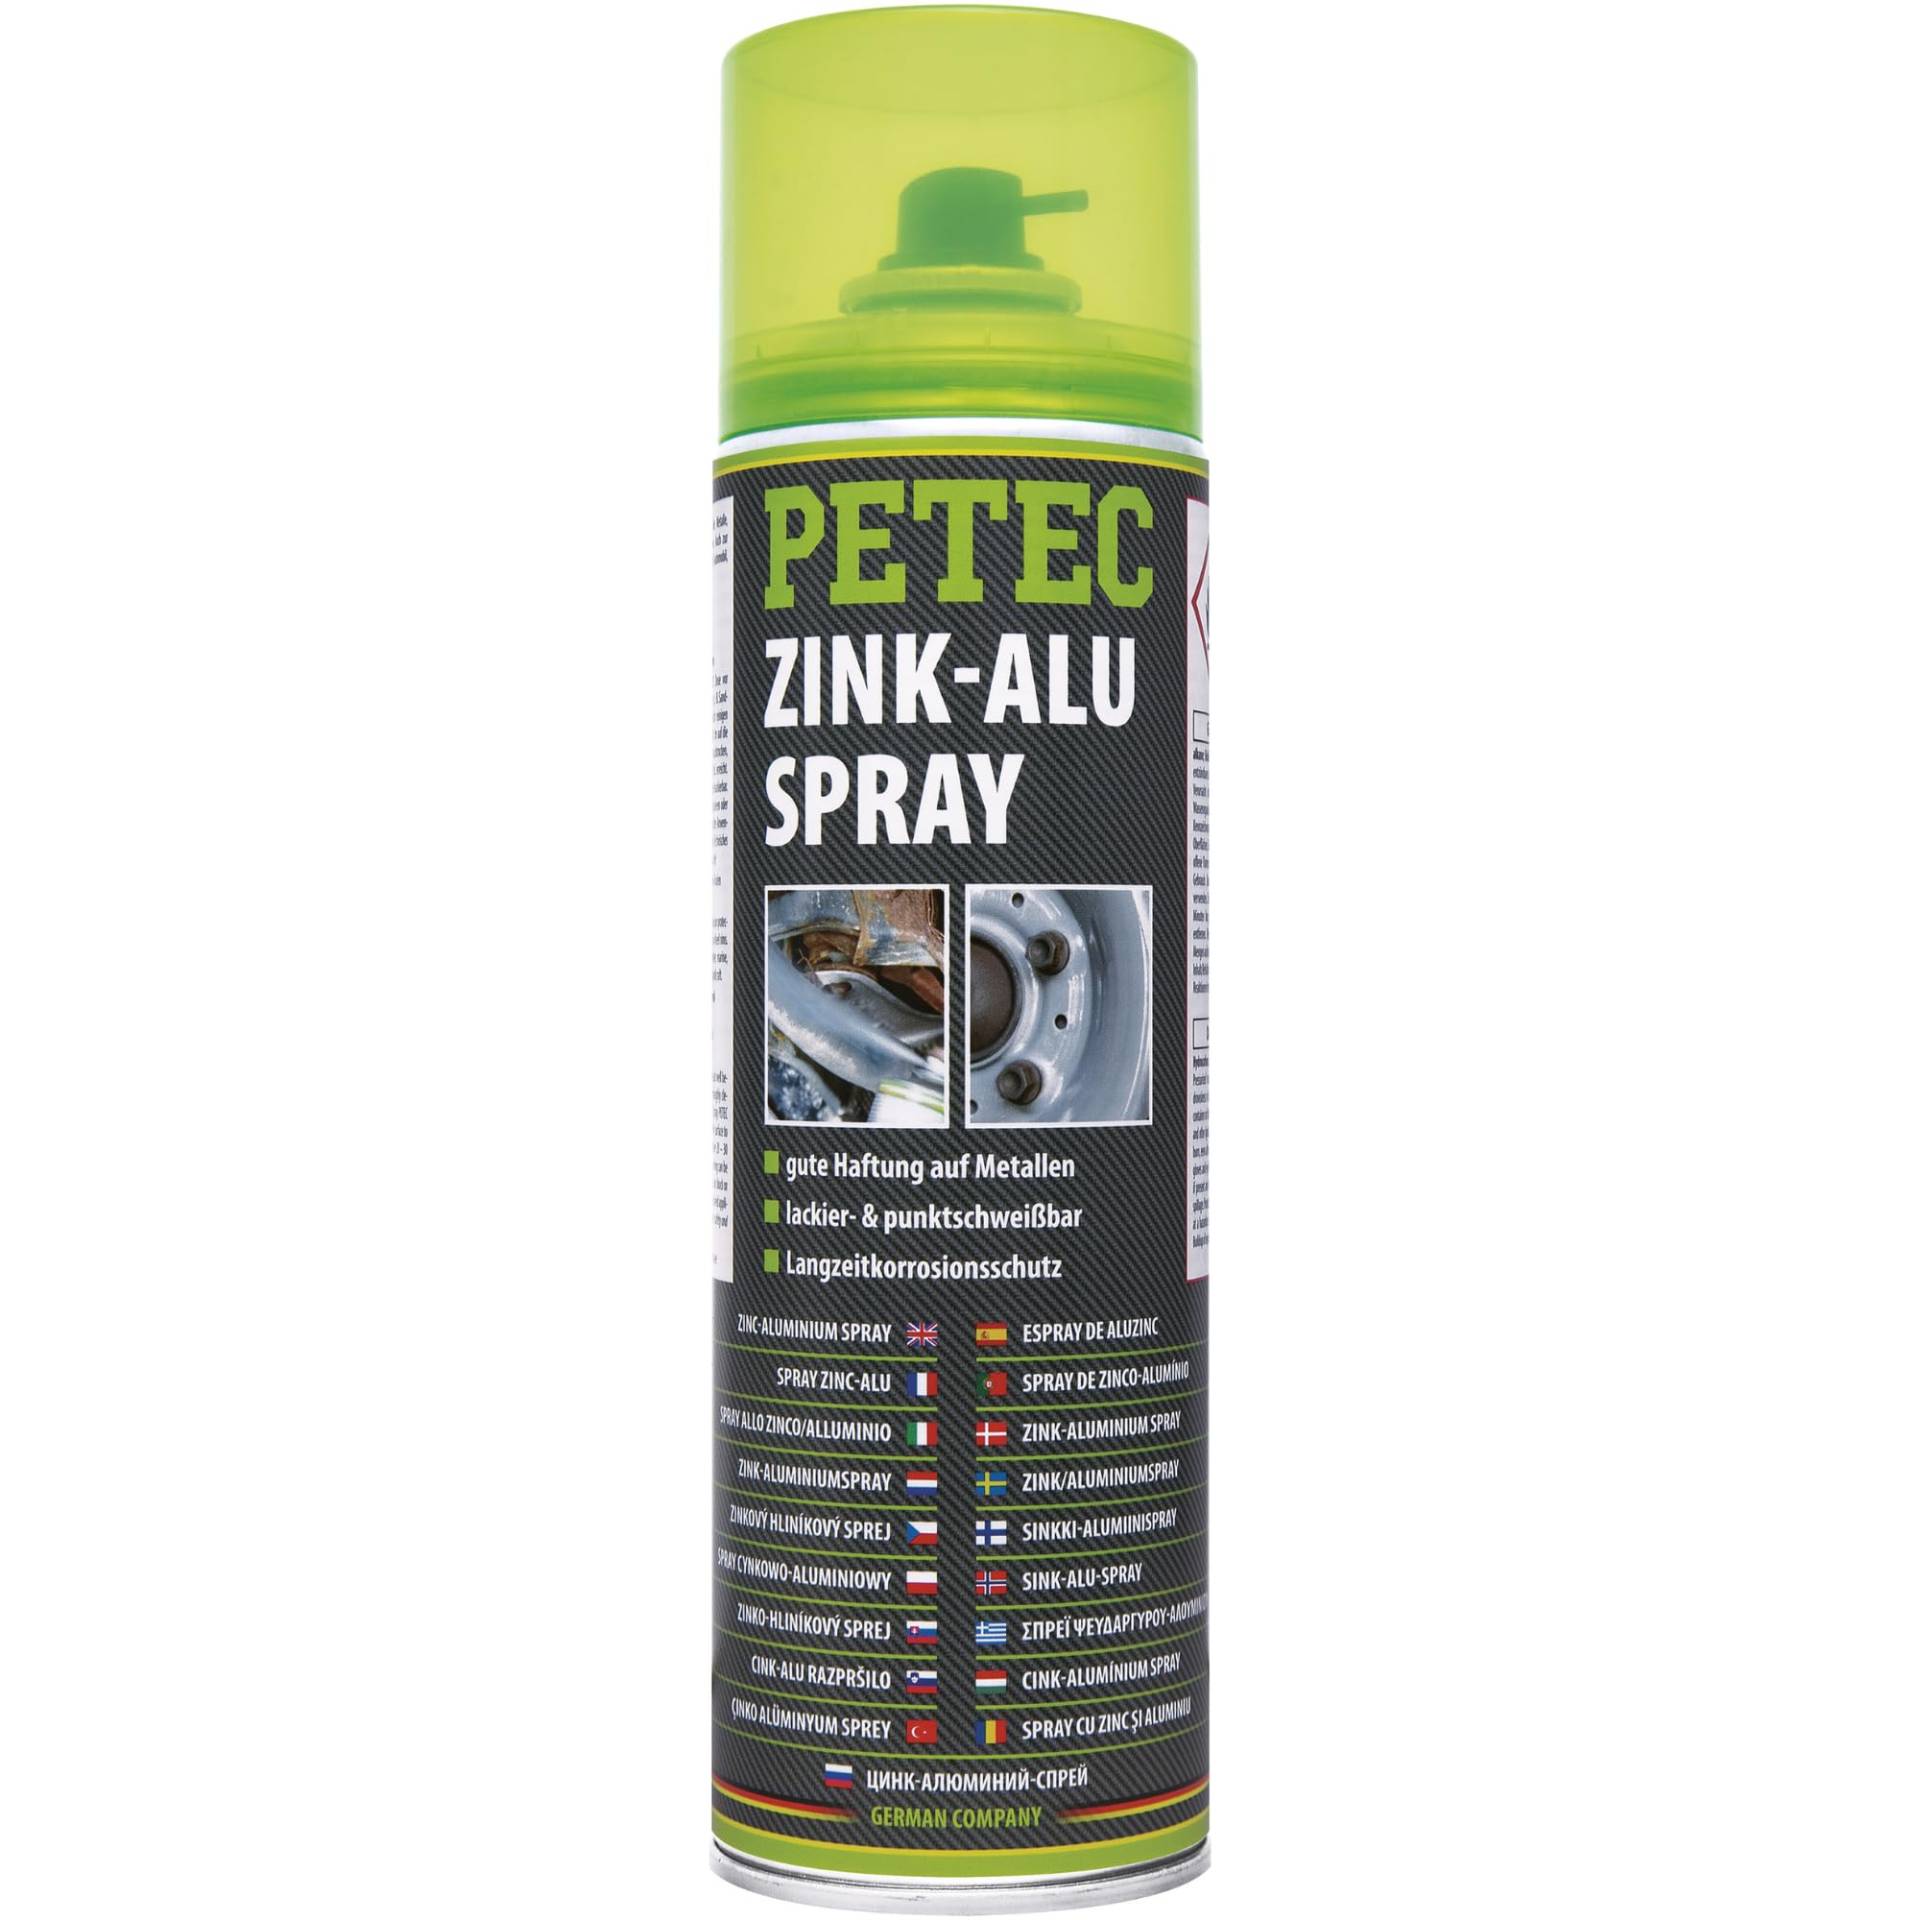 PETEC Zink-Alu Spray, 500 ml 71050 von PETEC